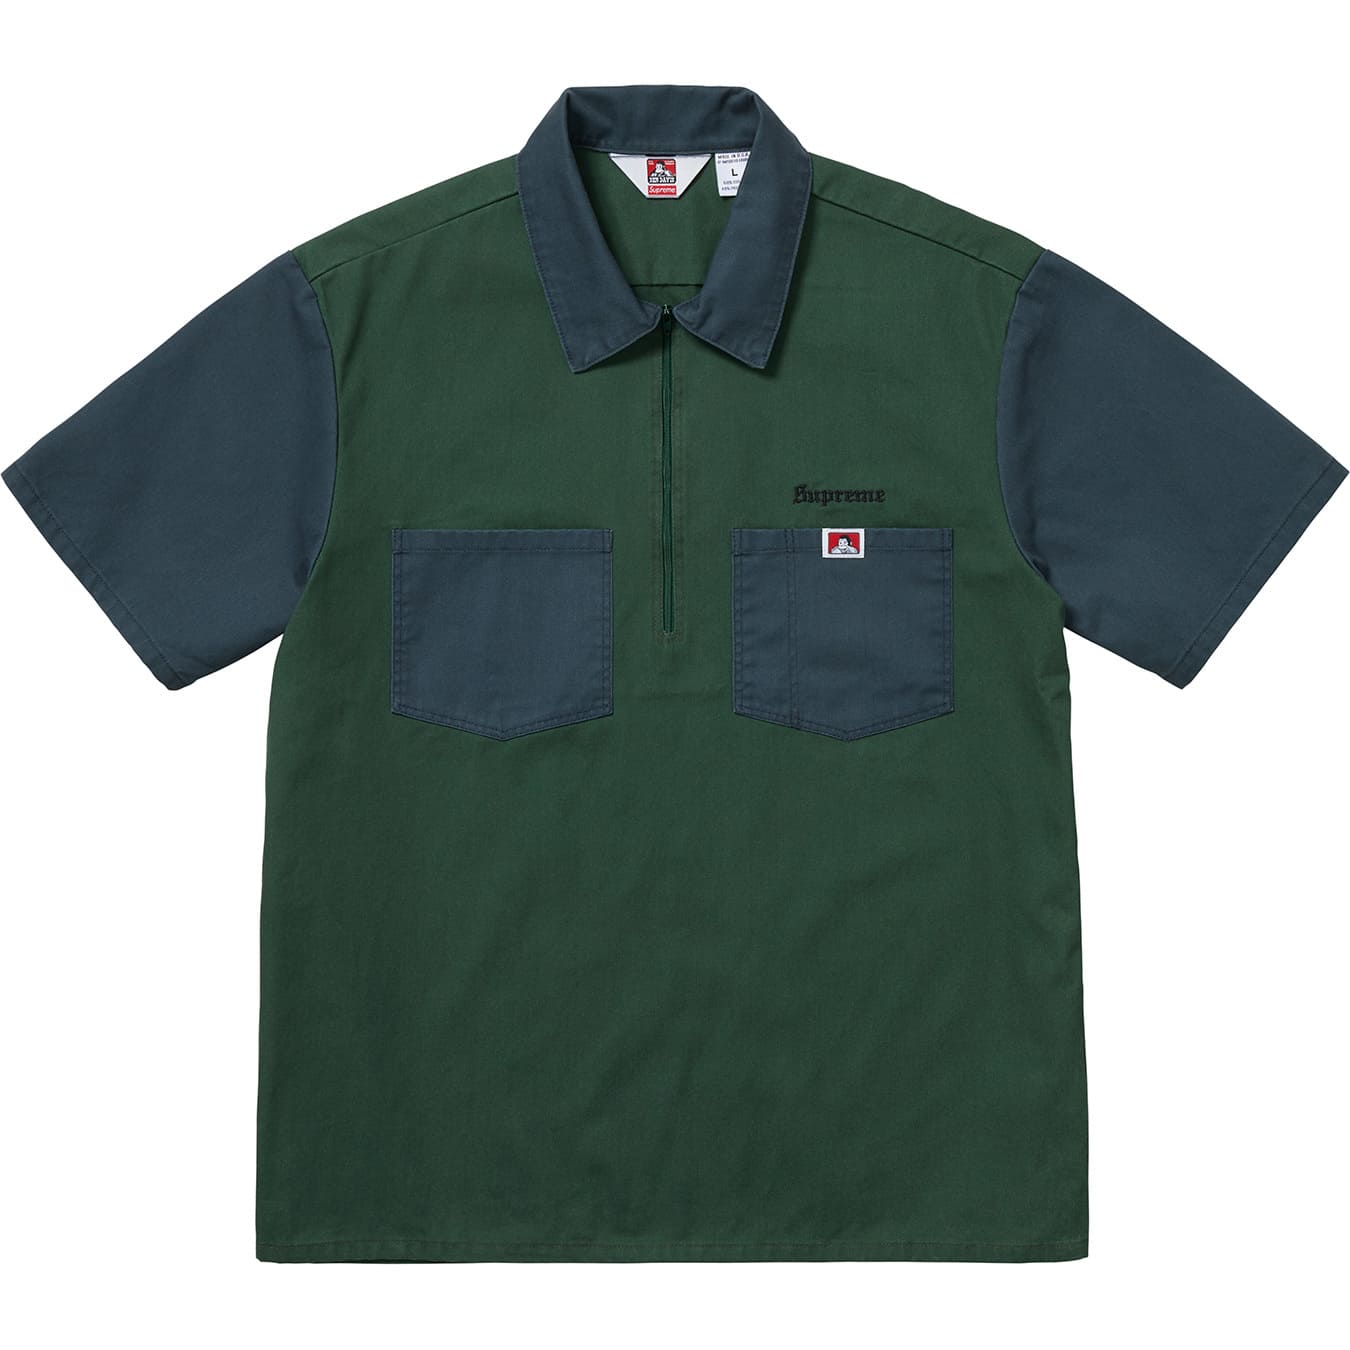 Supreme®/Ben Davis Half Zip Work Shirt